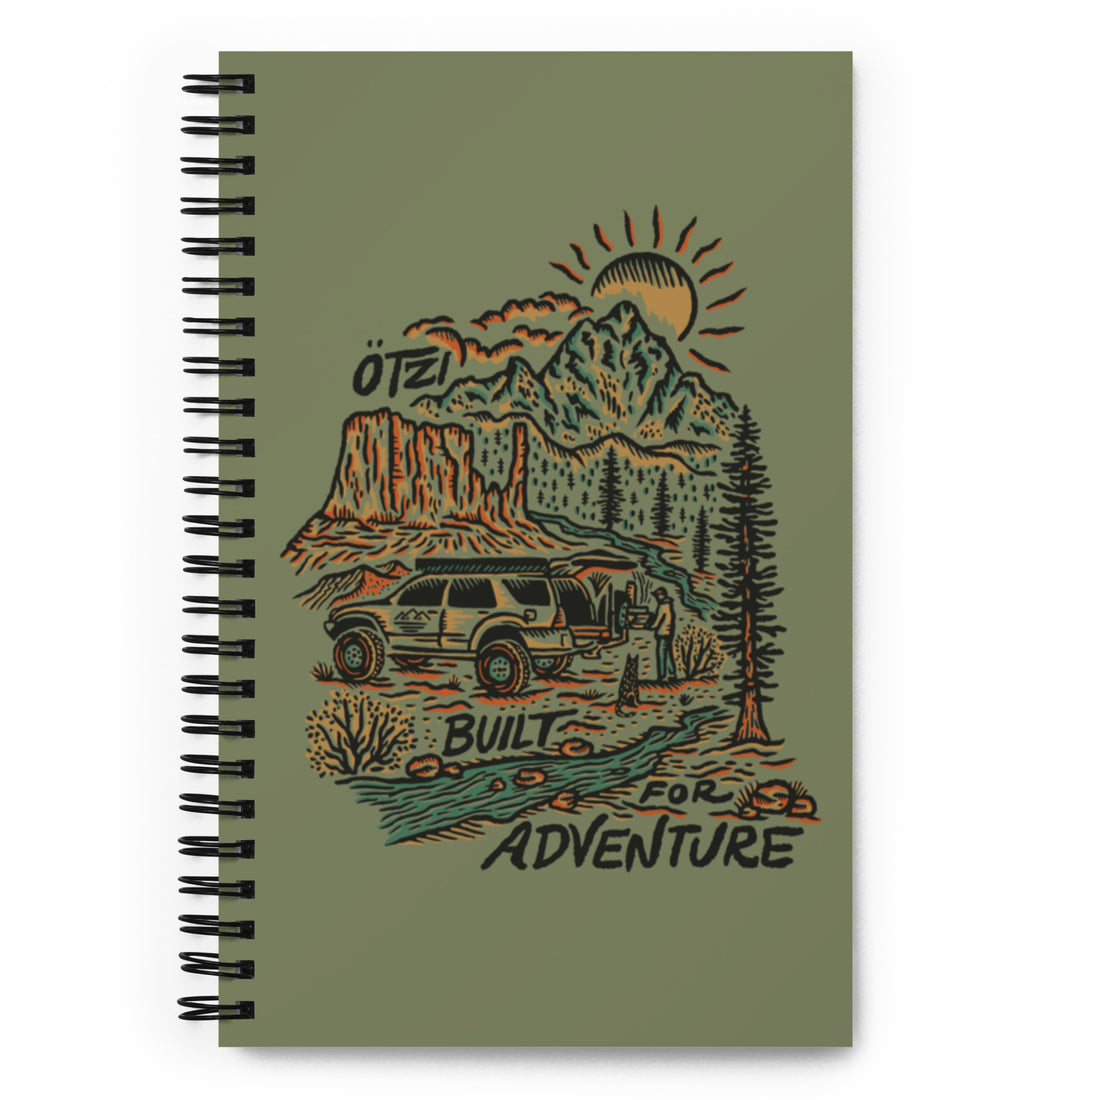 Rayco Design x Otzi Gear - Overland Adventure Spiral notebook